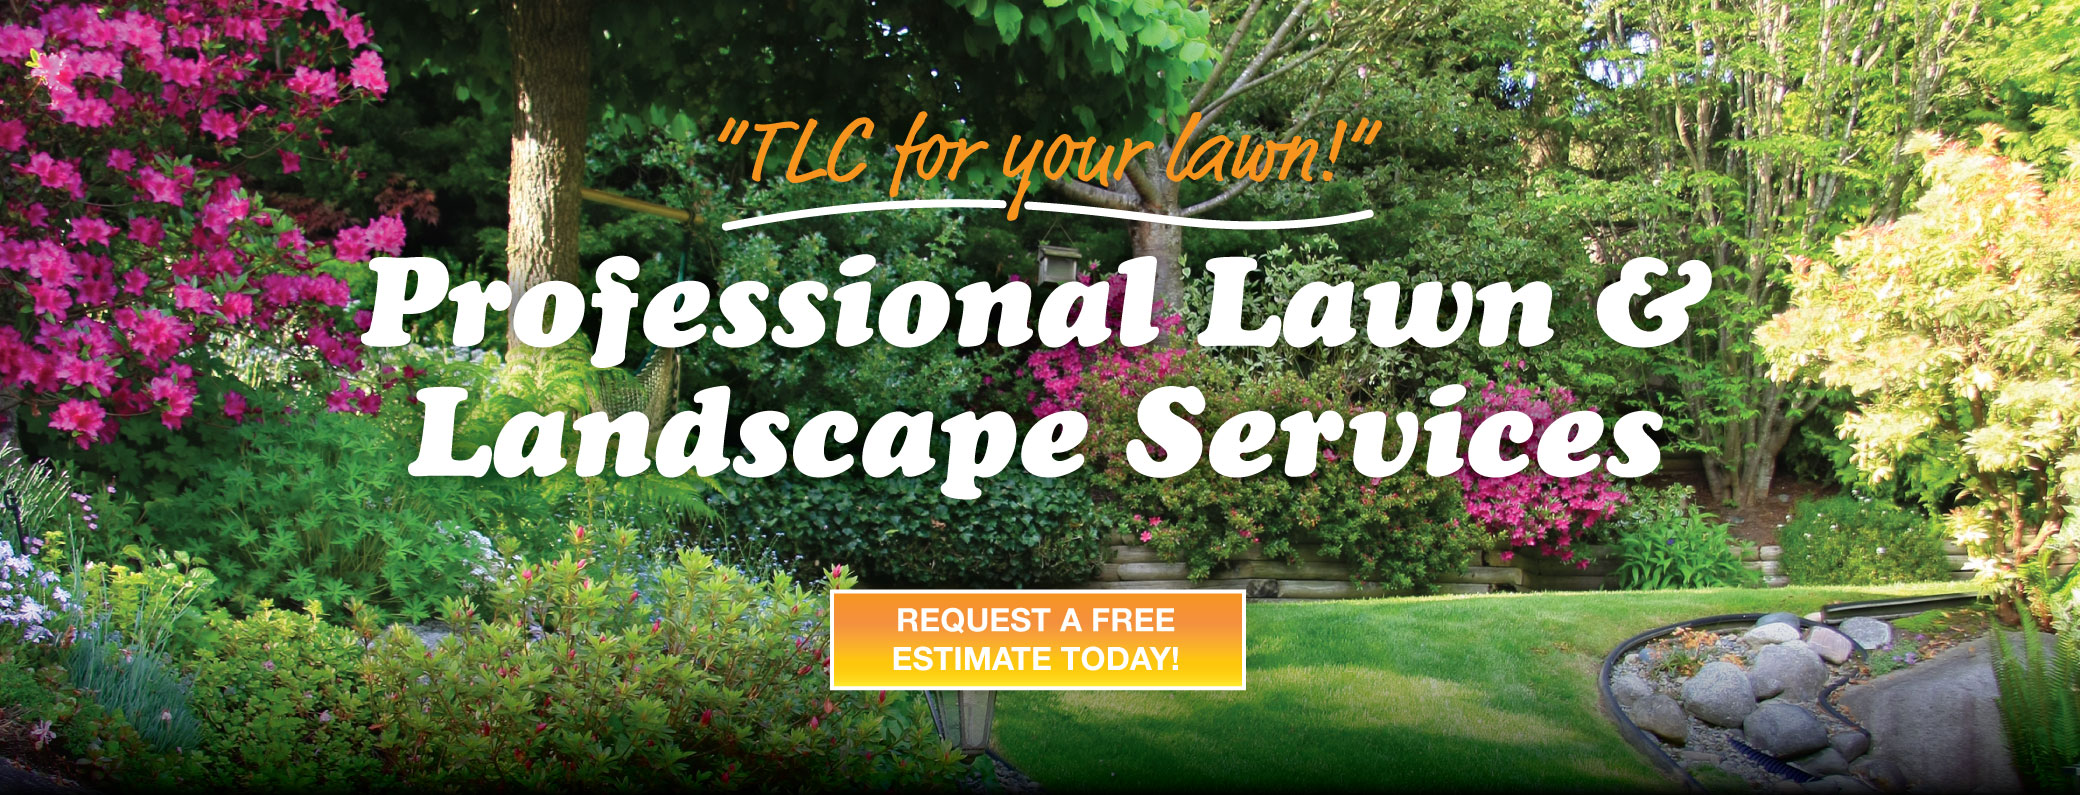 Professional Lawn and Landscape Services Slide